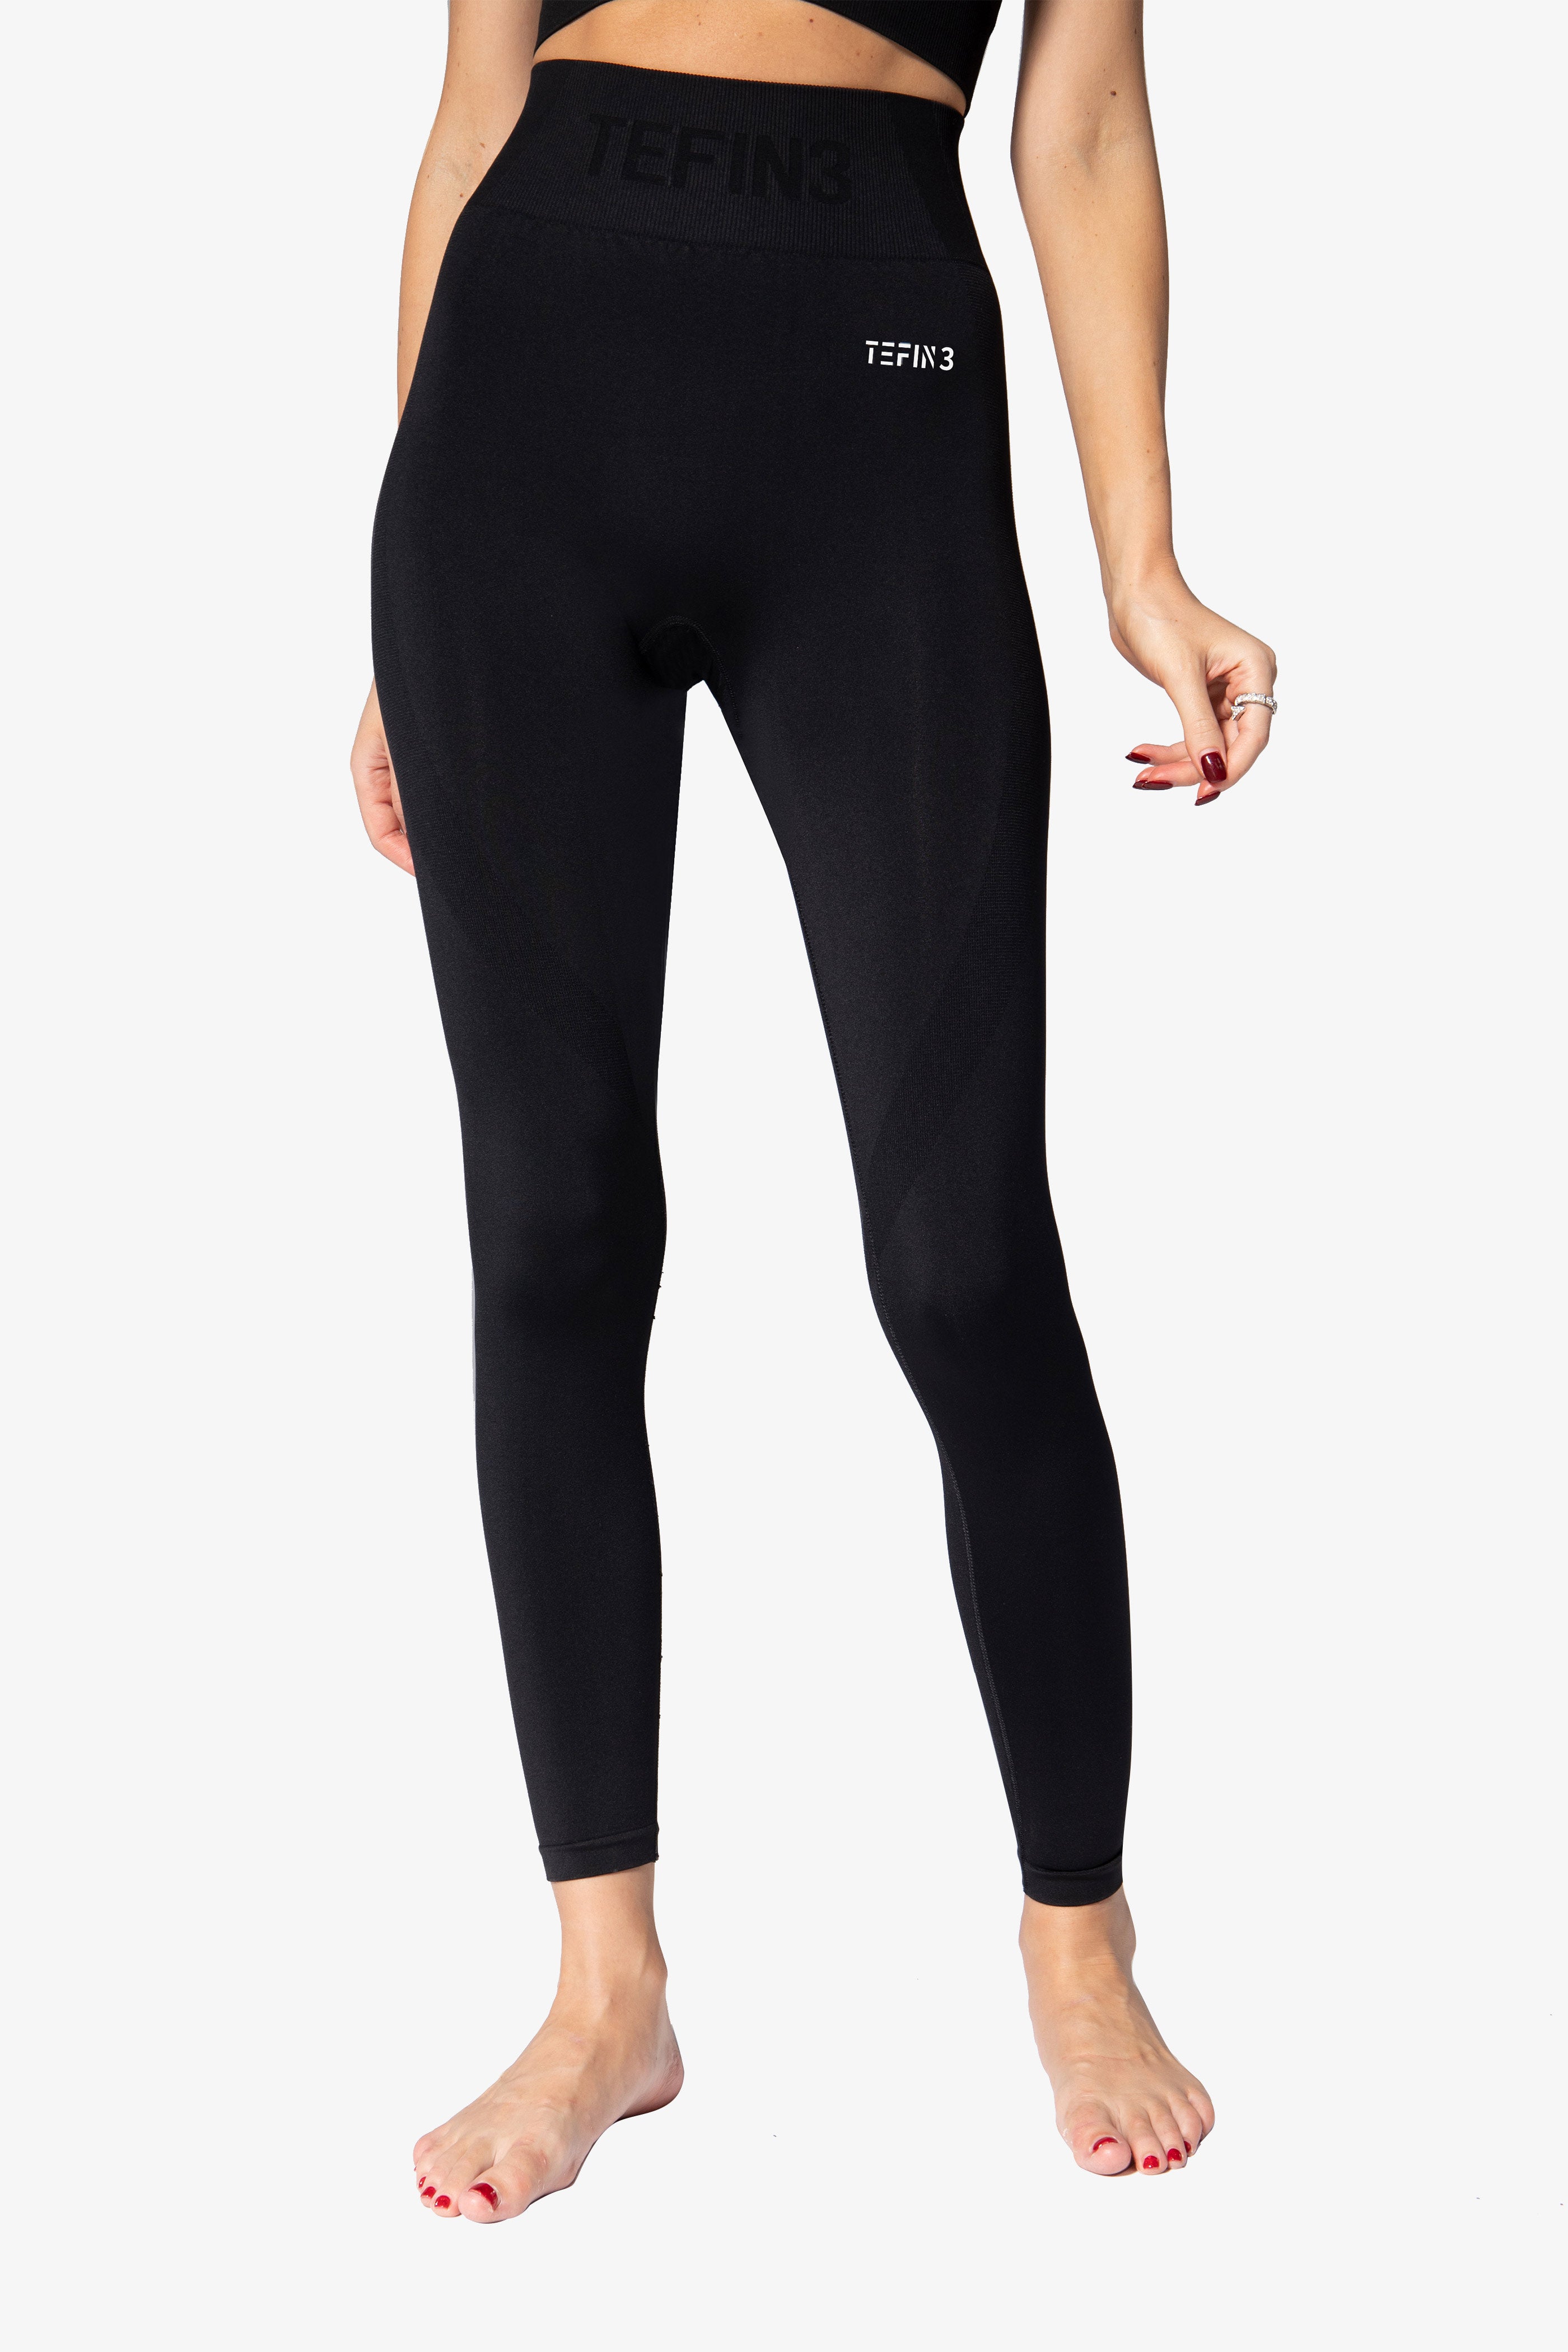 TEFIN3 Comfy seamless leggings Tight black (2)